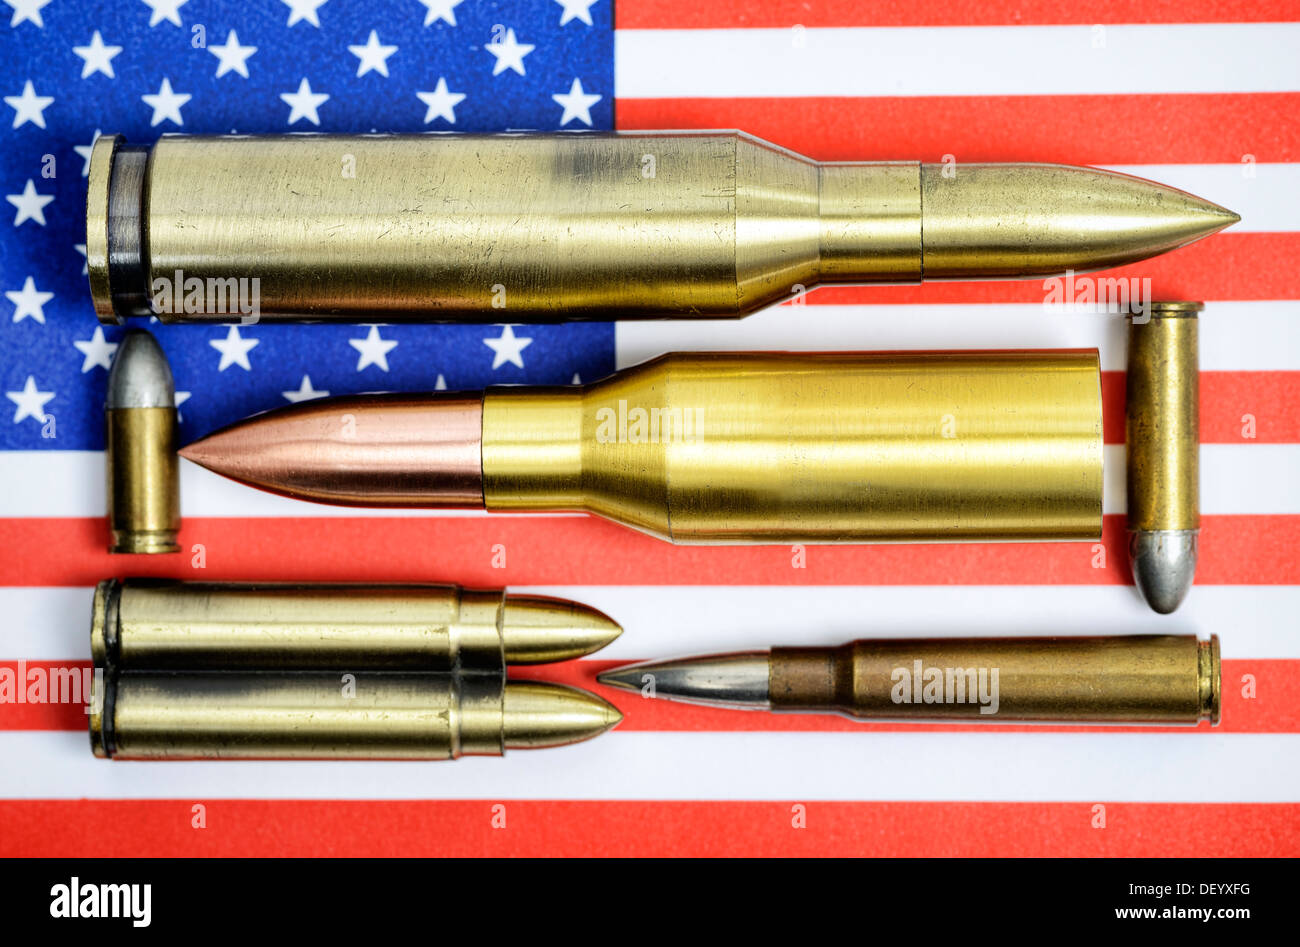 Ammunition on USA flag, terror warning, Munition auf USA-Fahne, Terrorwarnung Stock Photo